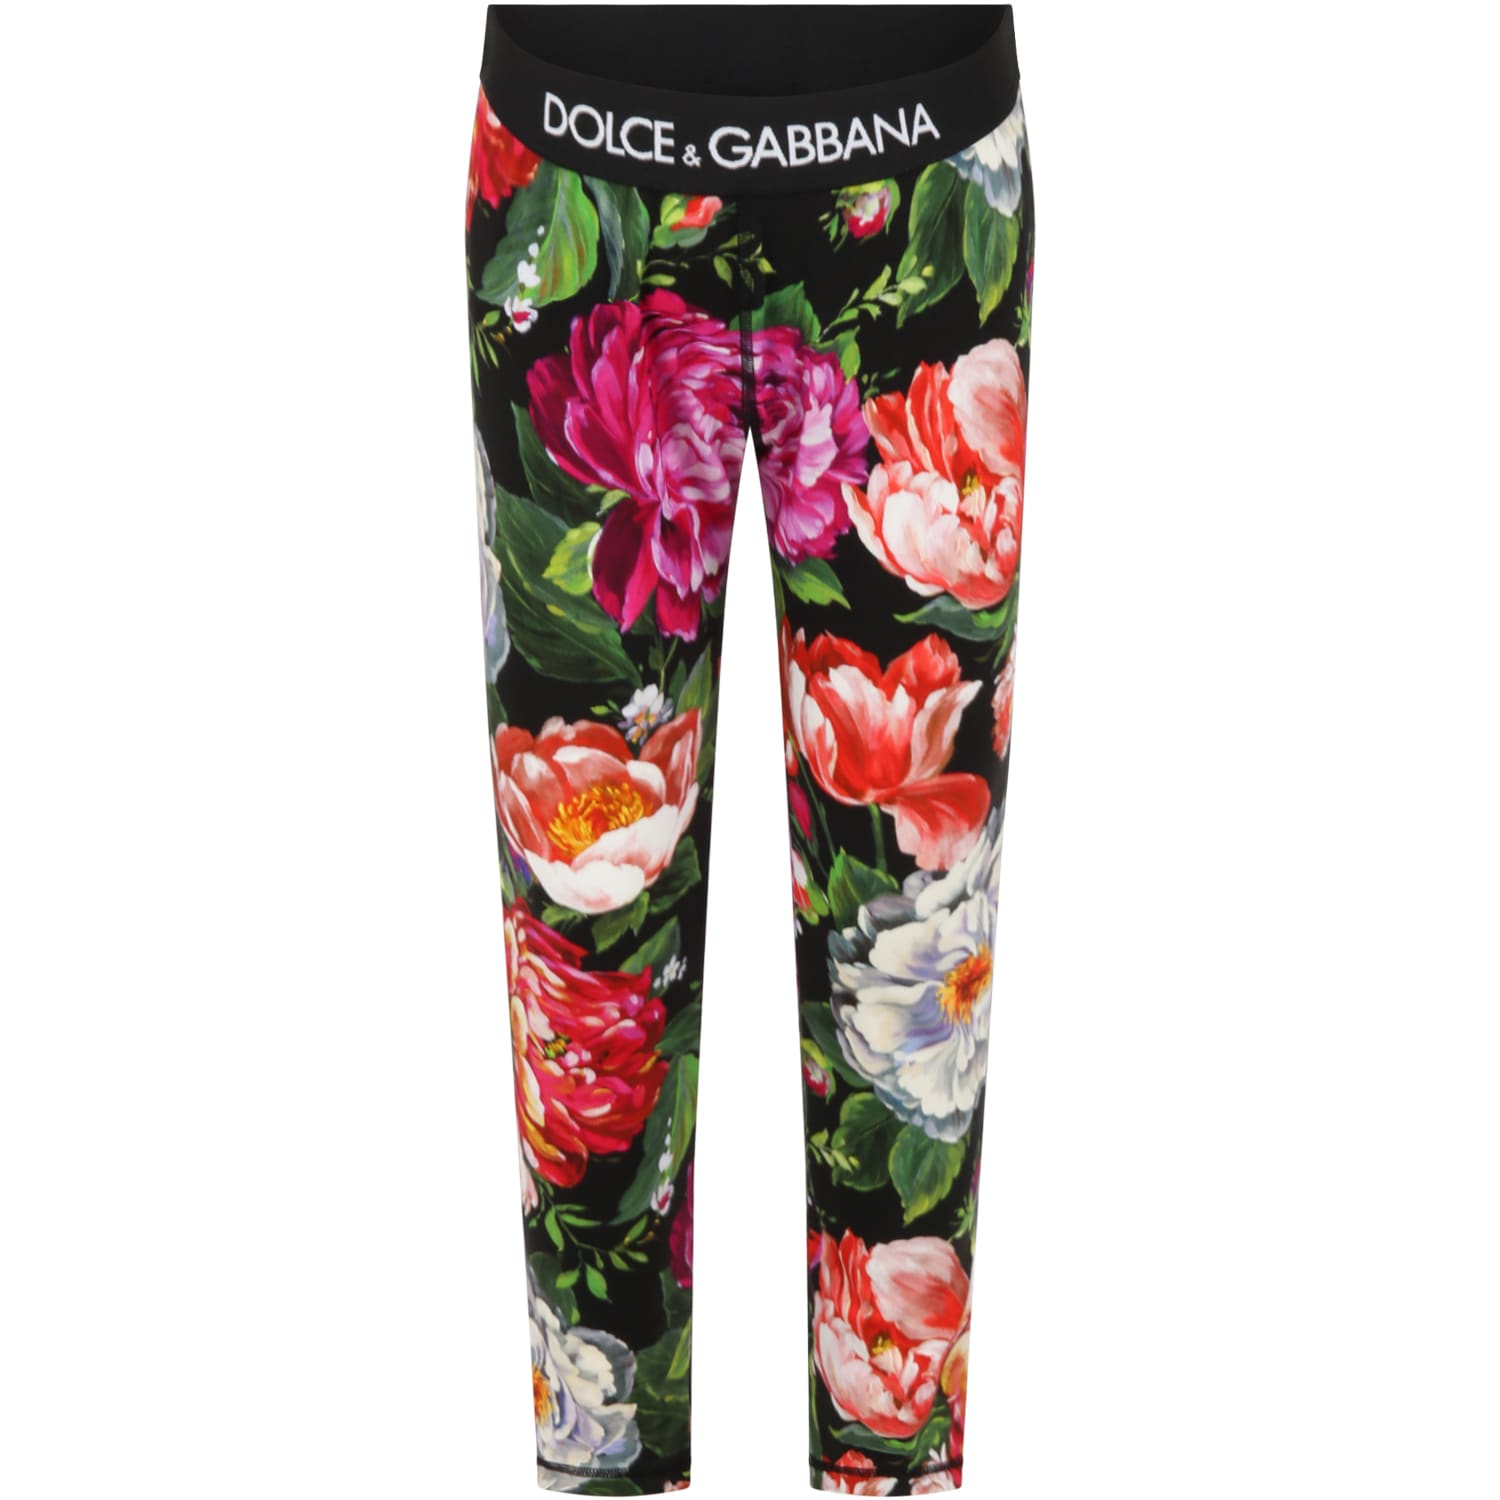 Dolce & Gabbana Black Leggings For Girl With Floral Print